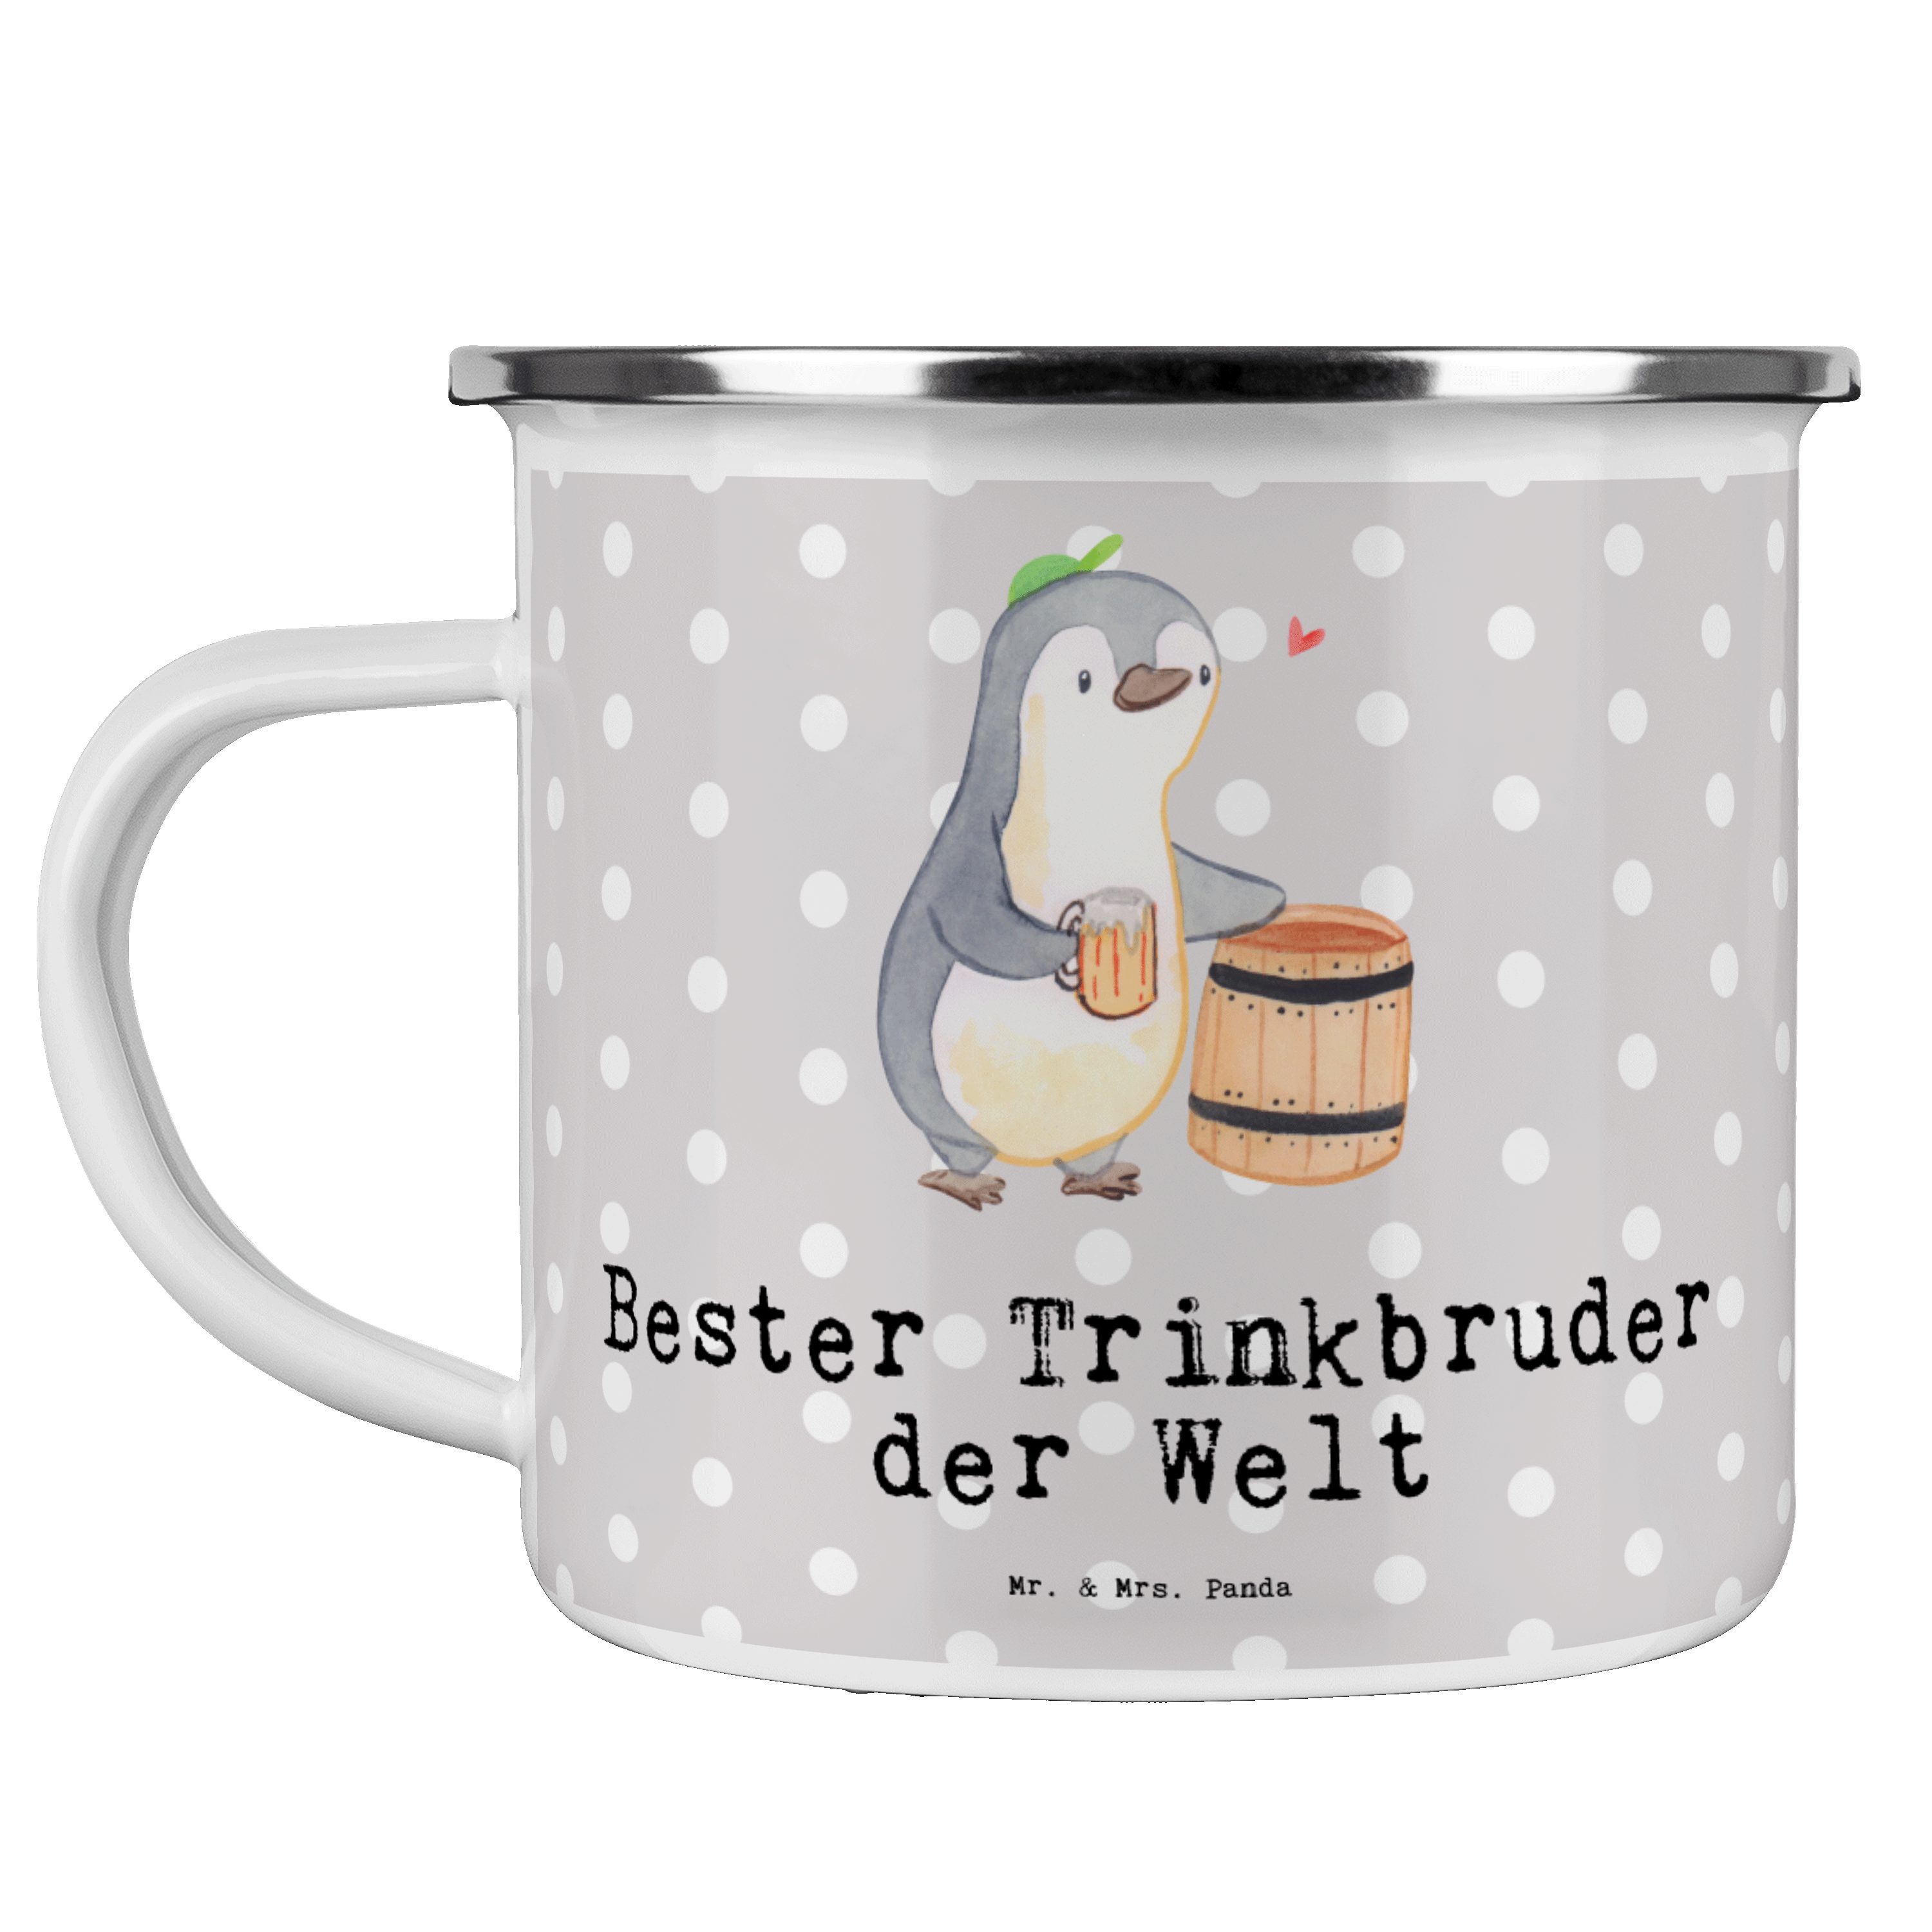 Welt Grau - & Outdoo, Mrs. Mr. Trinkbruder Bester Pastell Emaille Geschenk, der Becher Panda Pinguin -